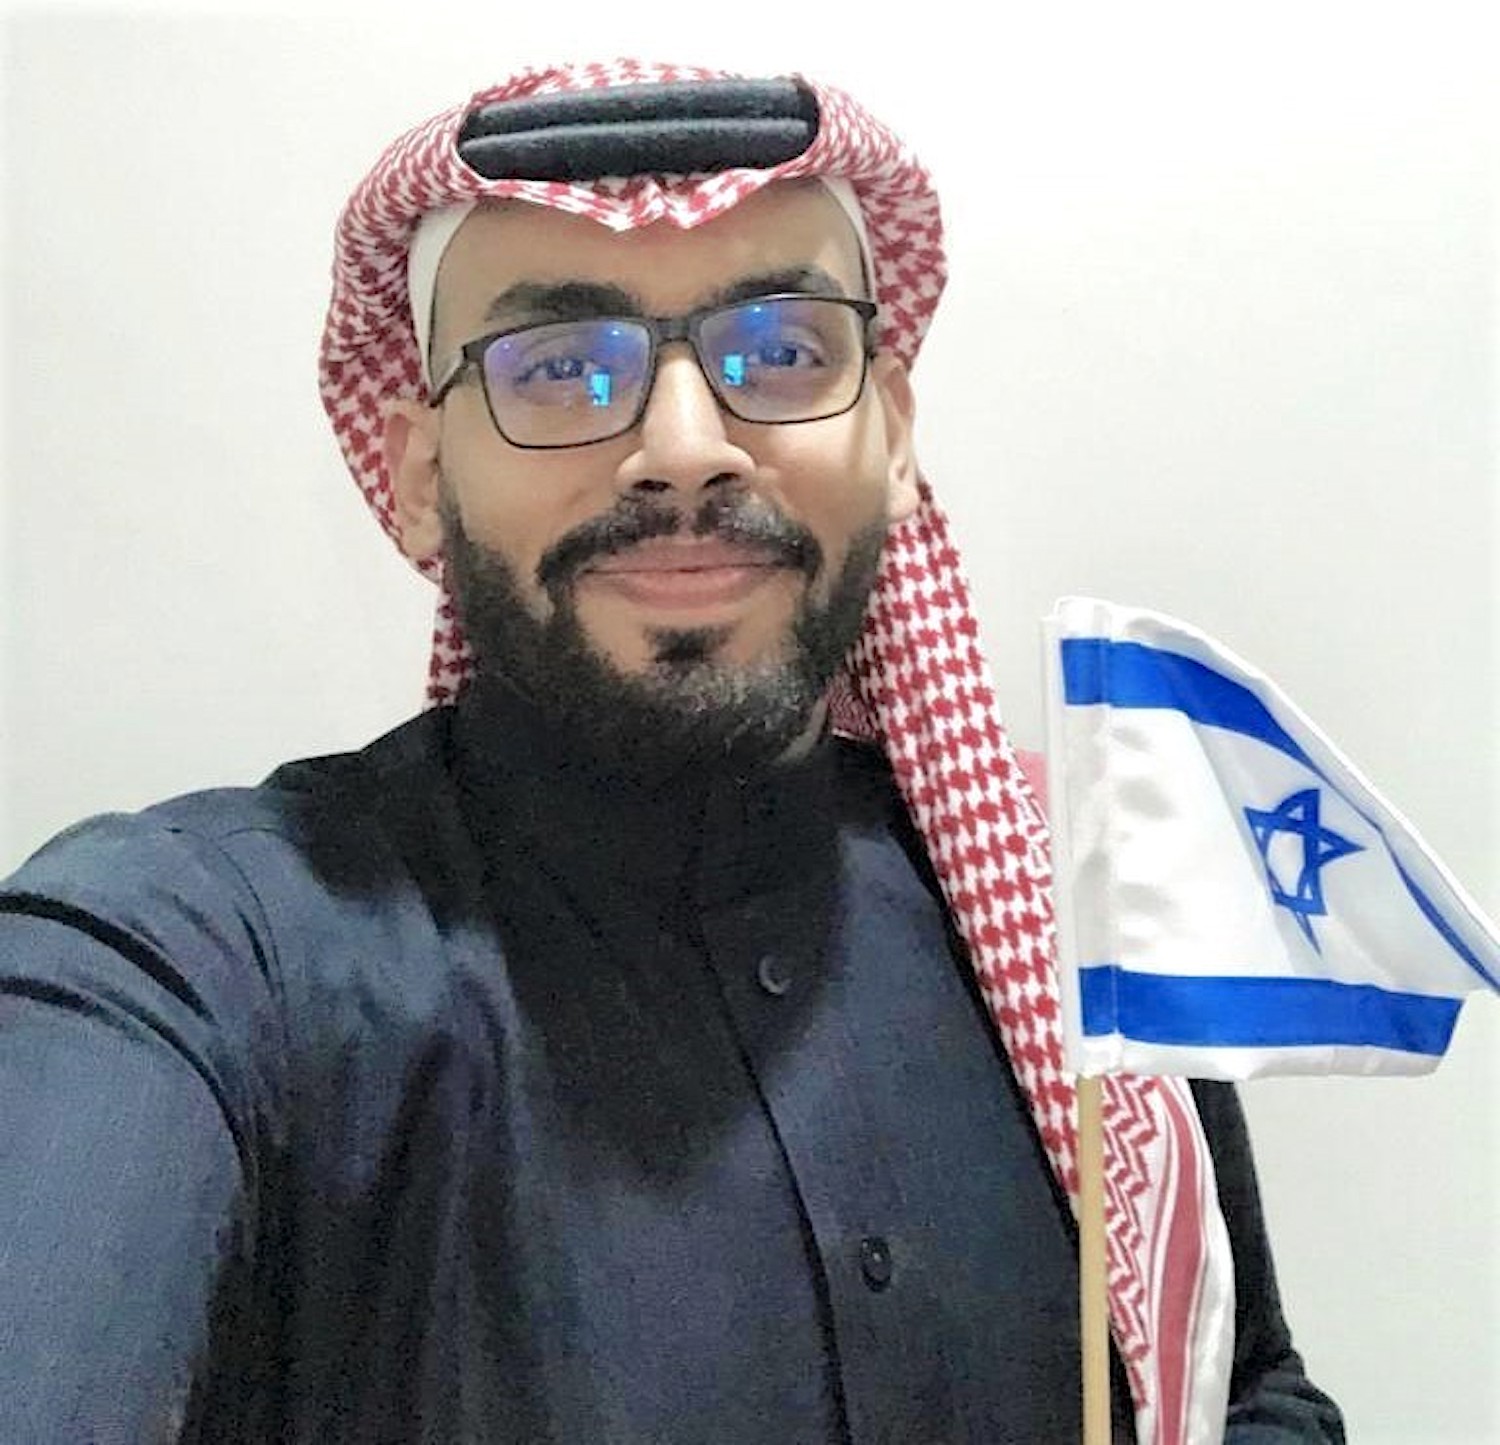 Saudi social-media influencer: âHope our nation will sign a peace treaty with Israelâ